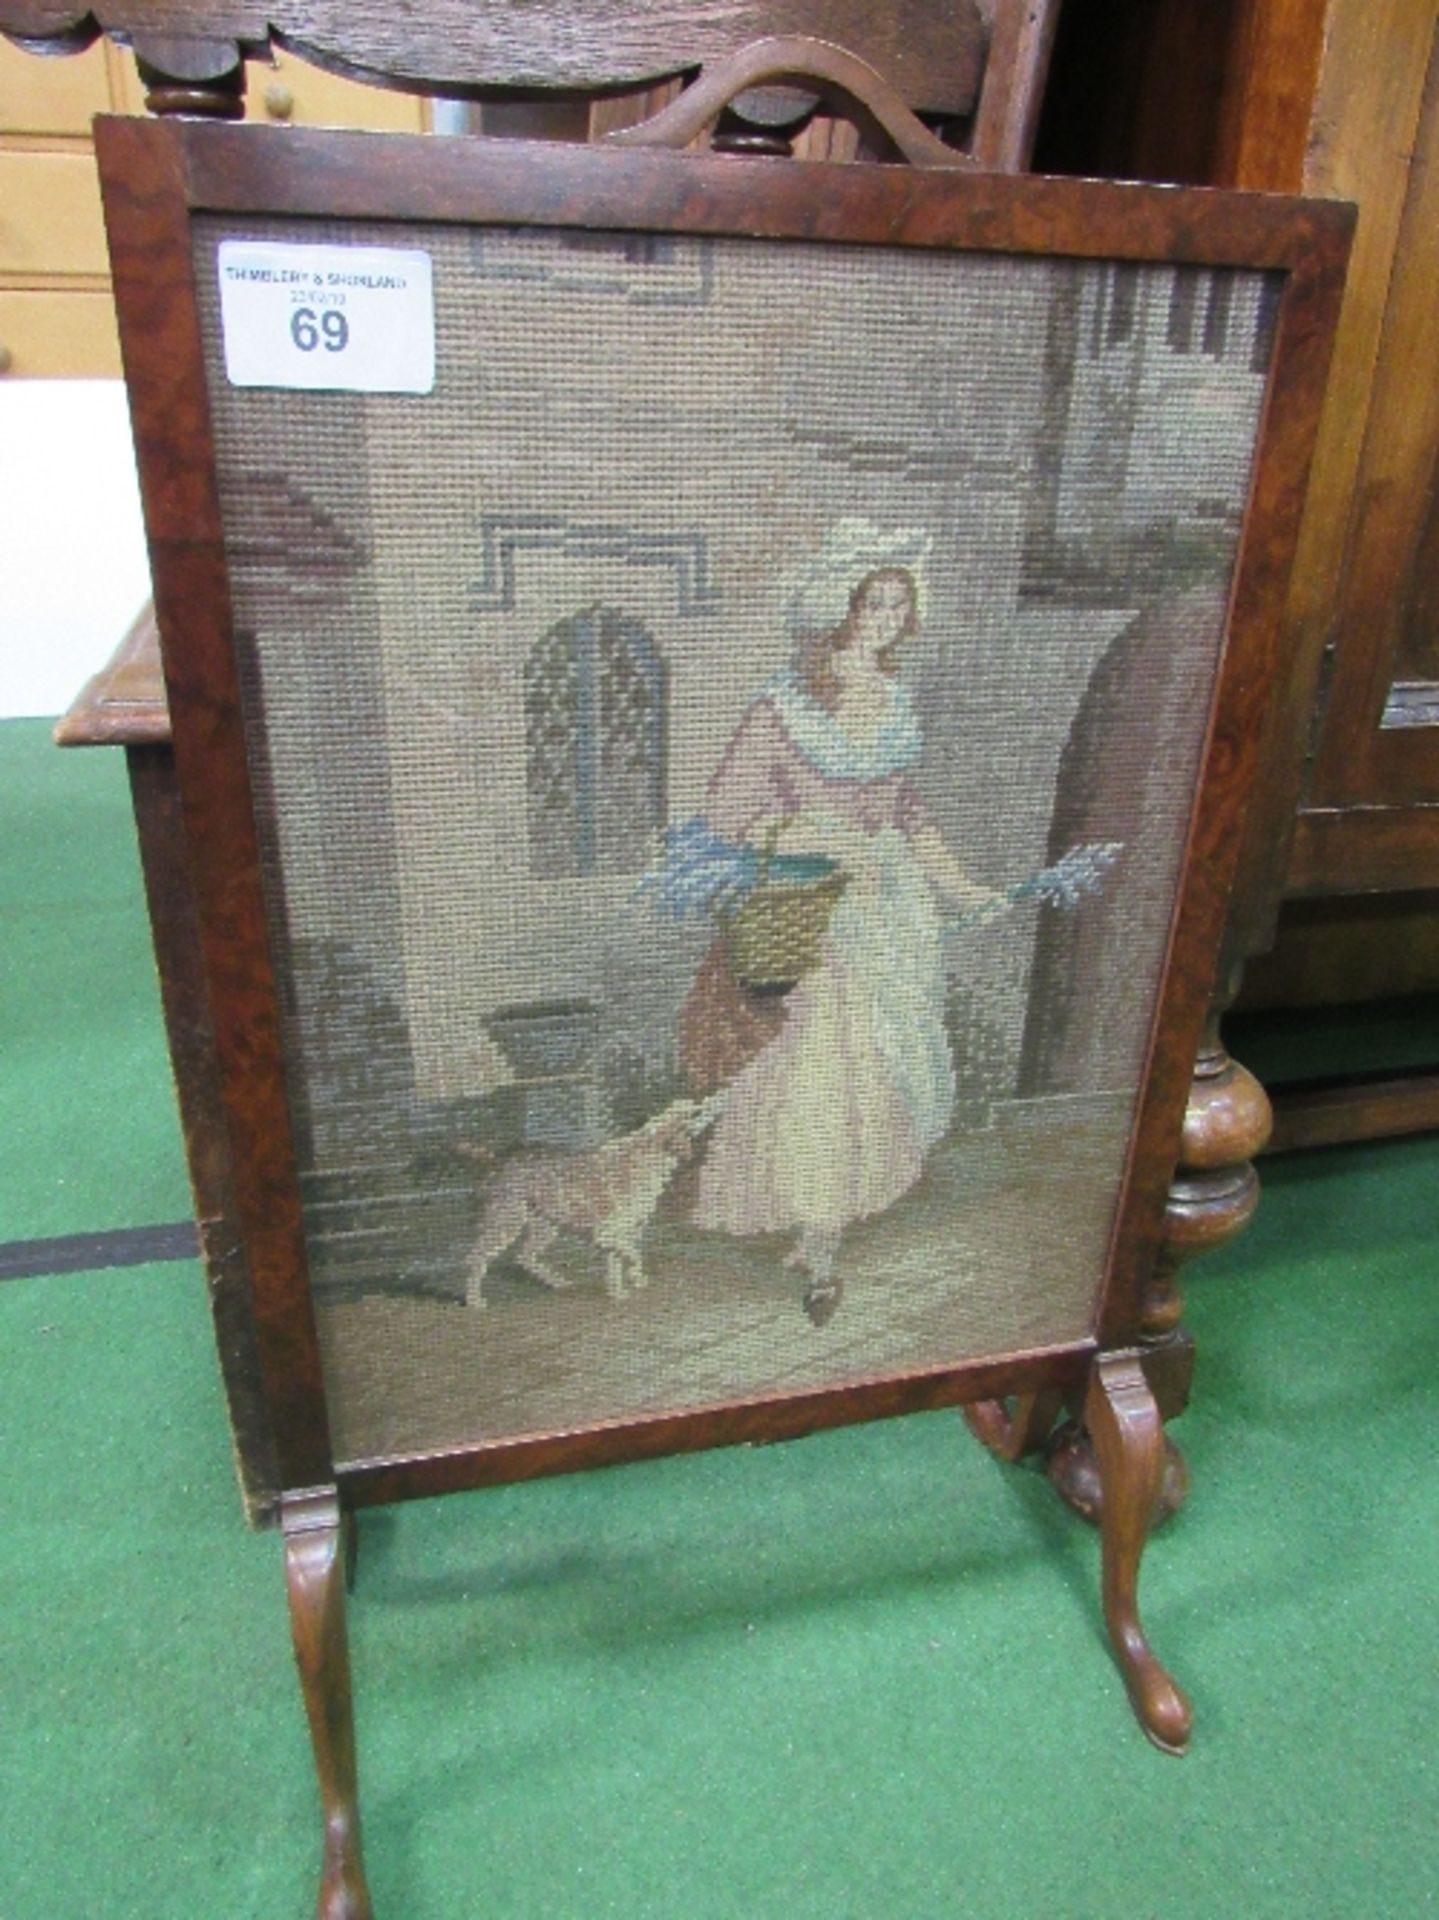 Circa 1900-1920 Edwardian burr walnut fire screen, Lavender Lady. Estimate £20-40.